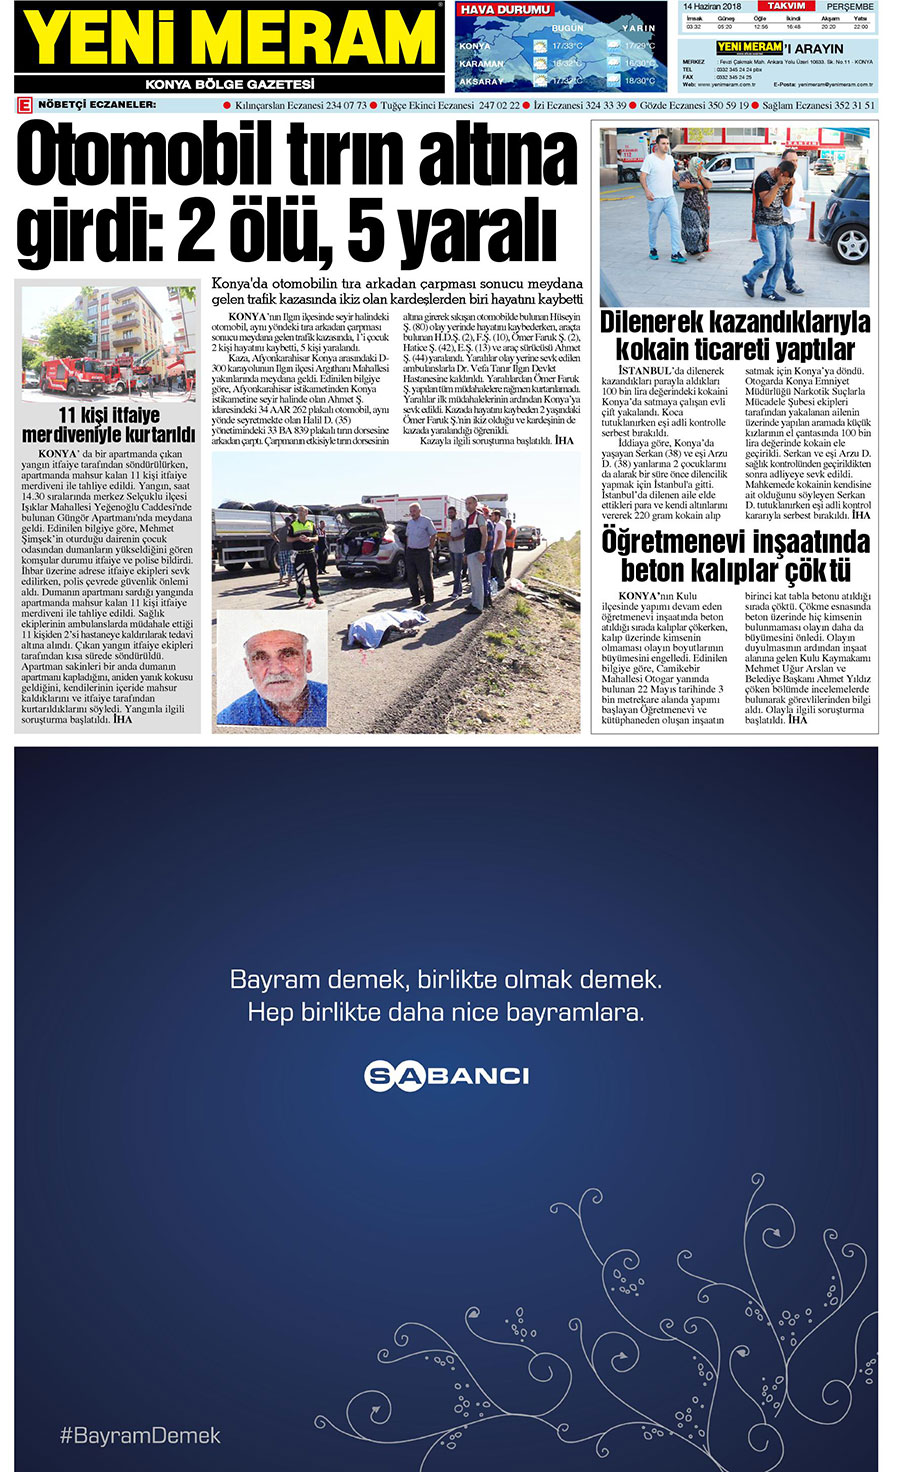 14 Haziran 2018 Yeni Meram Gazetesi